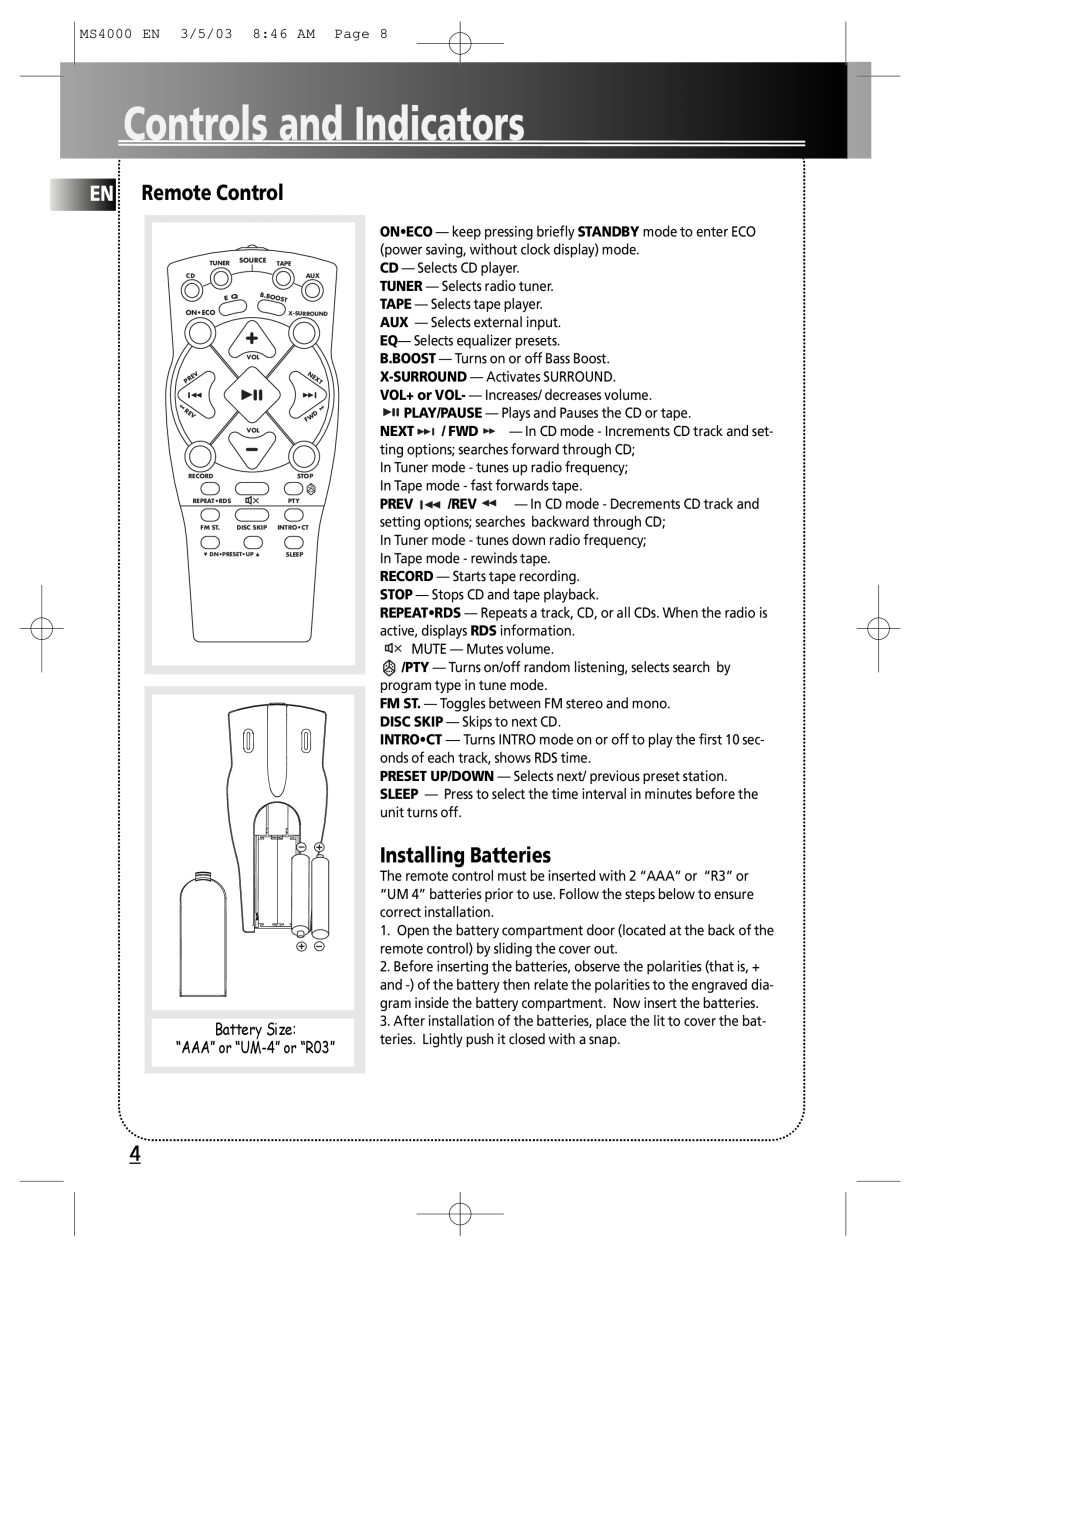 Technicolor - Thomson MS4000 manual EN Remote Control, Installing Batteries, Controls and Indicators, Next, Prev 